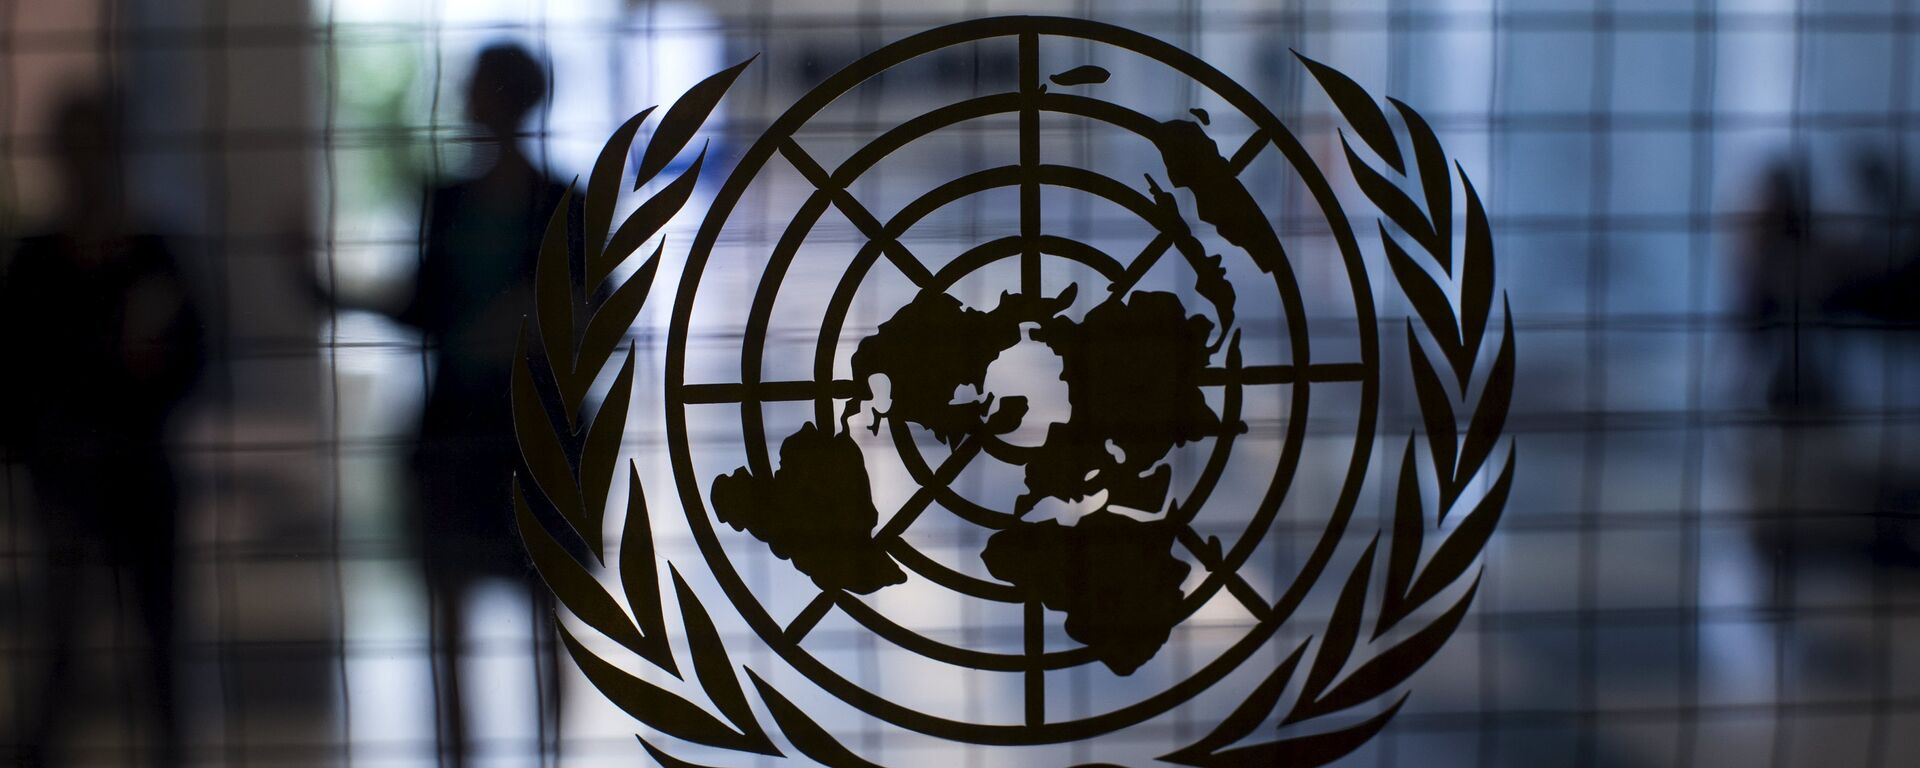 Logo de la ONU - Sputnik Mundo, 1920, 14.07.2021